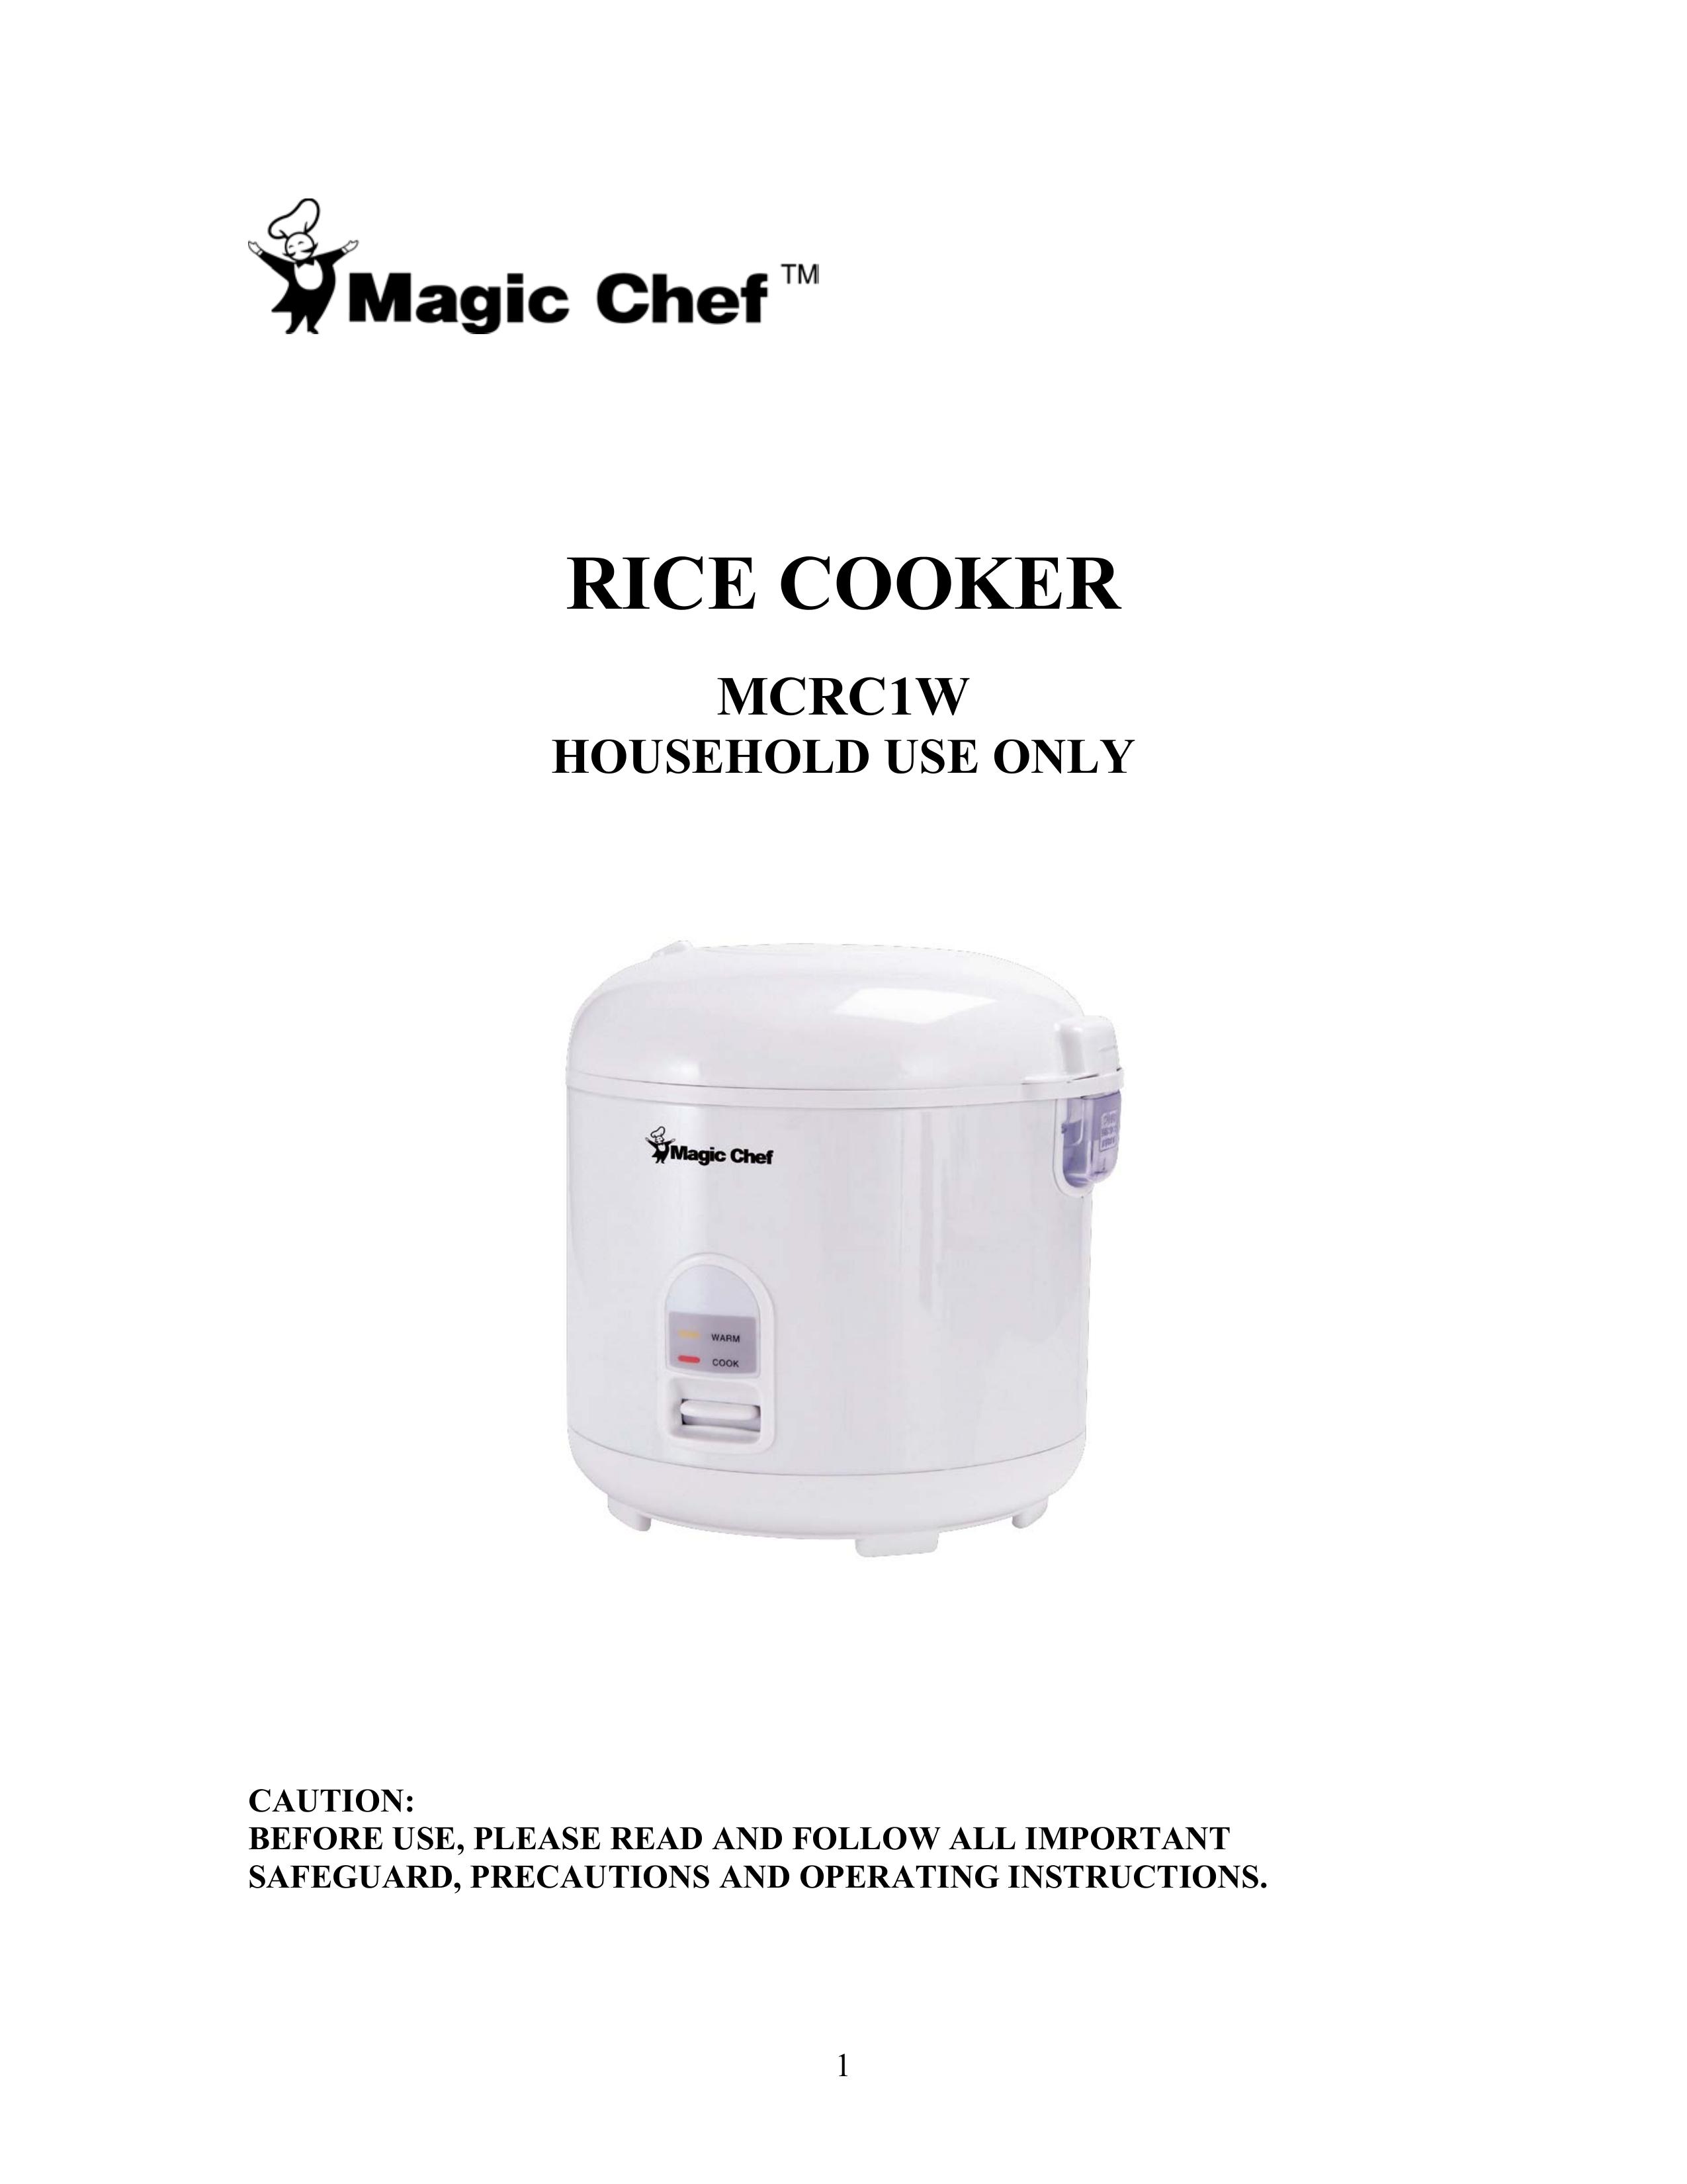 Magic Chef MCRC1W Rice Cooker User Manual